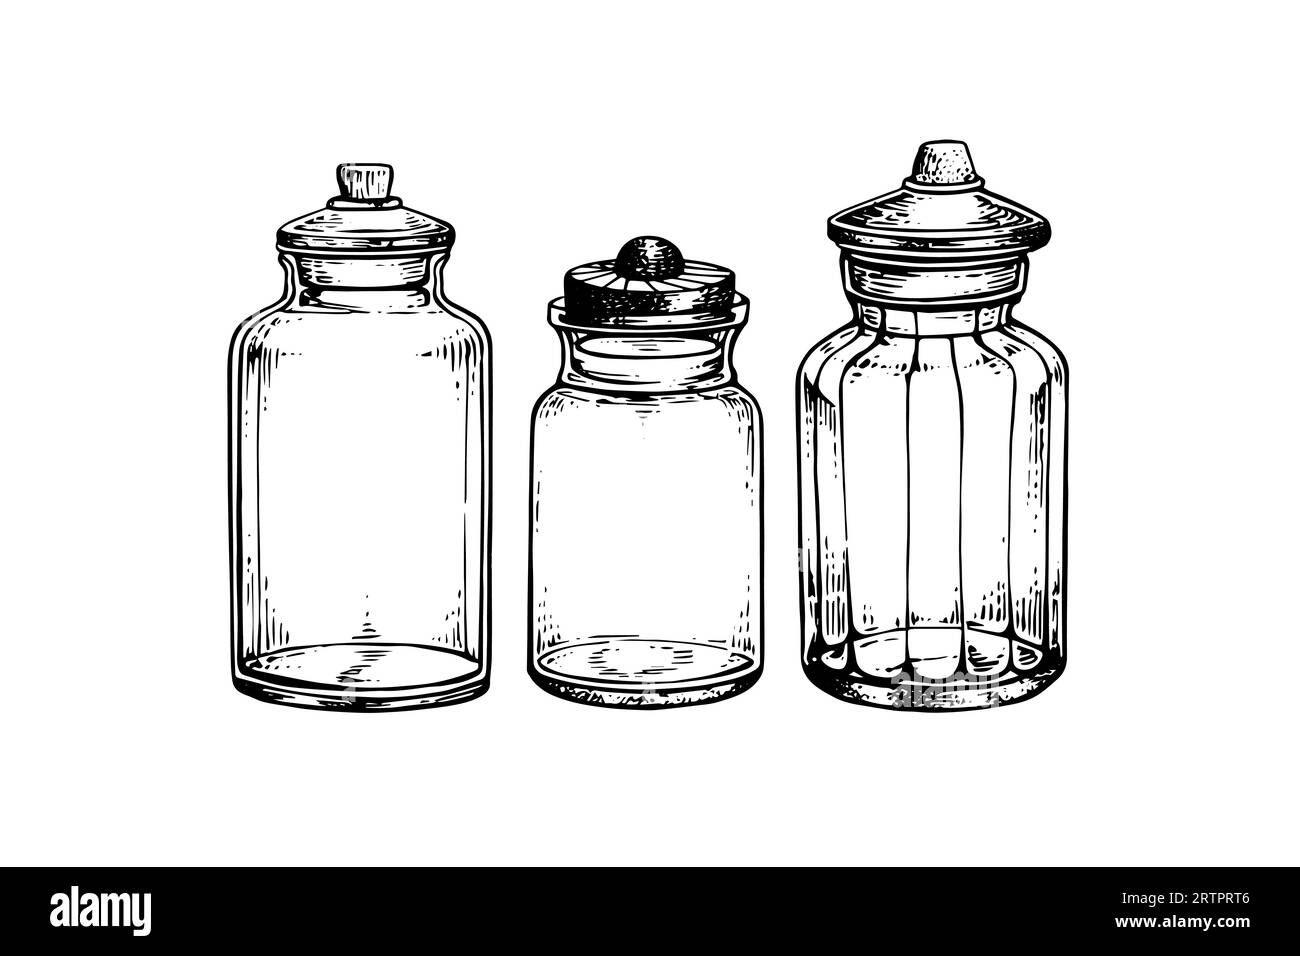 Empty glass jars ink sketch. Vector vintage black engraving illustration. Stock Vector